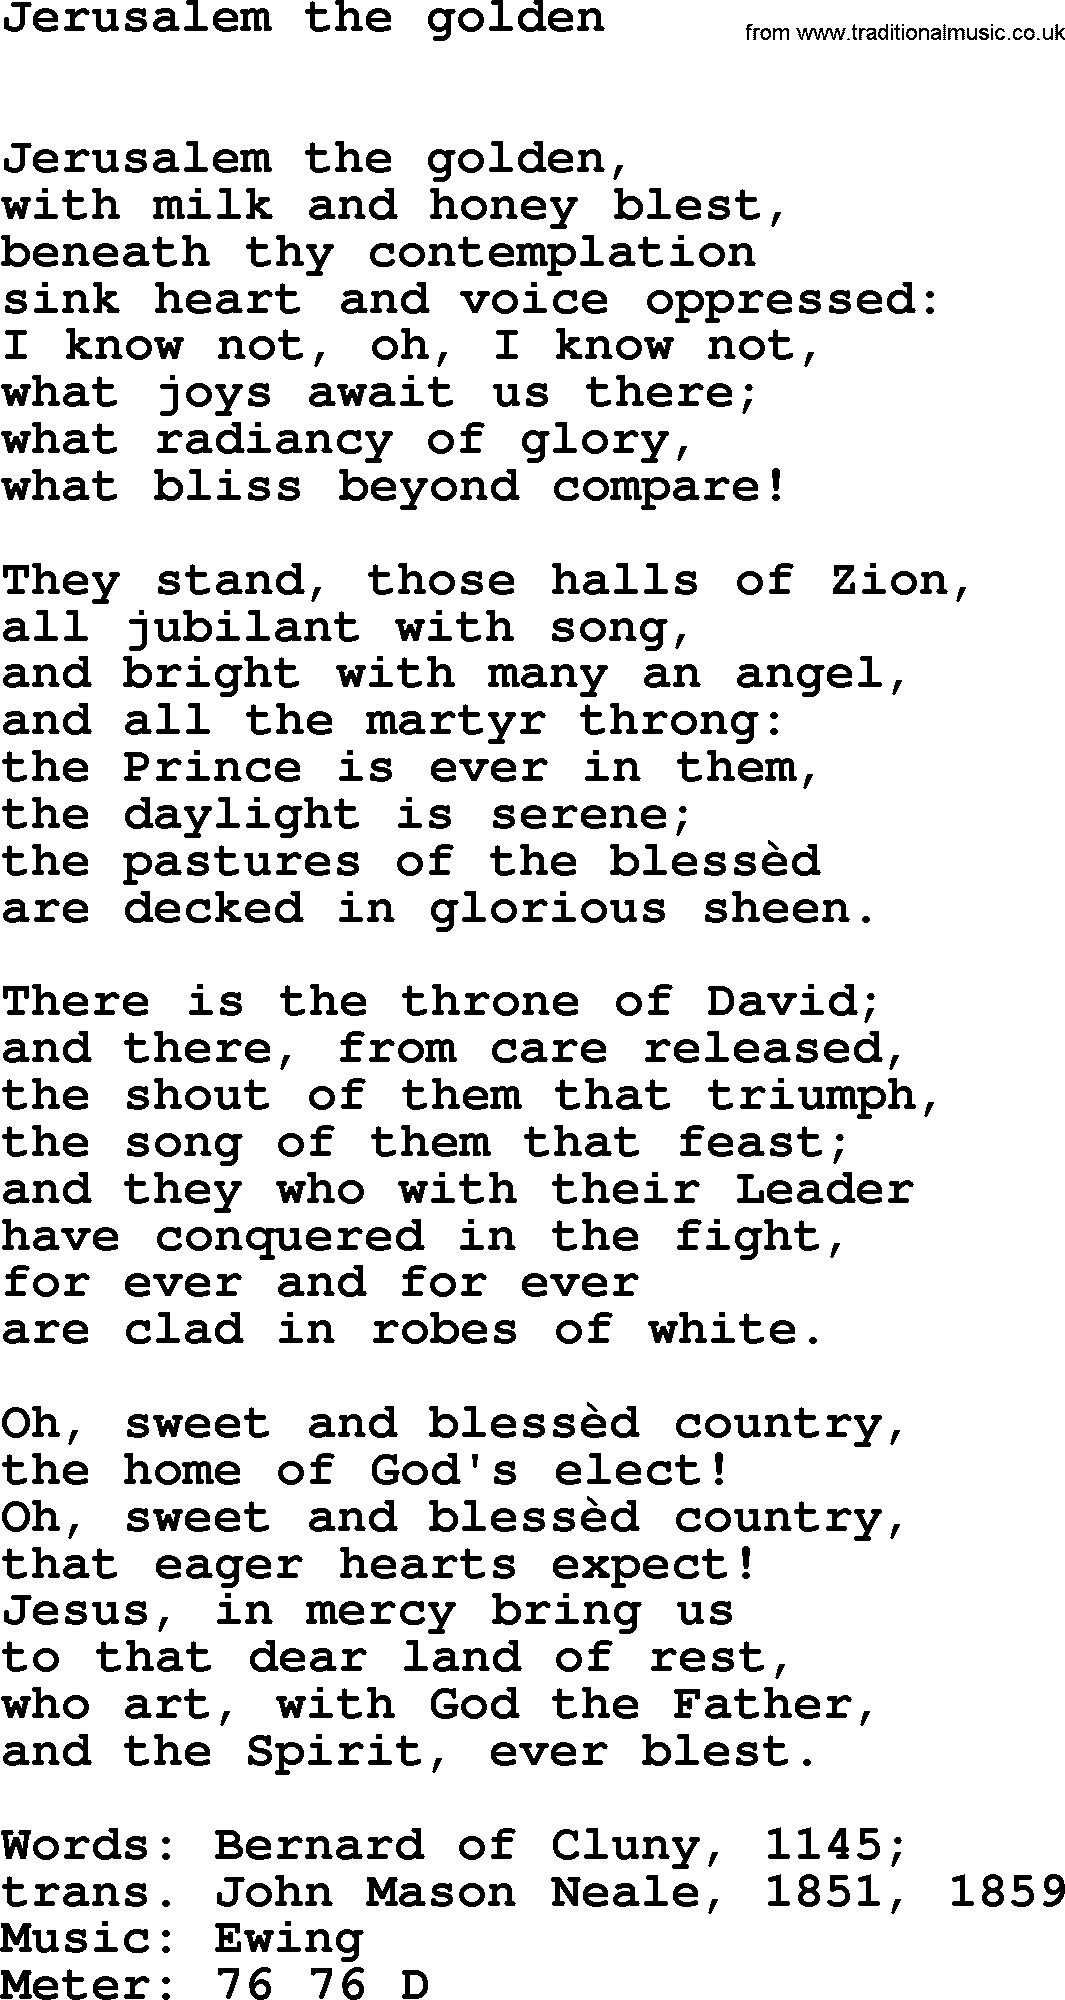 Book of Common Praise Hymn: Jerusalem The Golden.txt lyrics with midi music